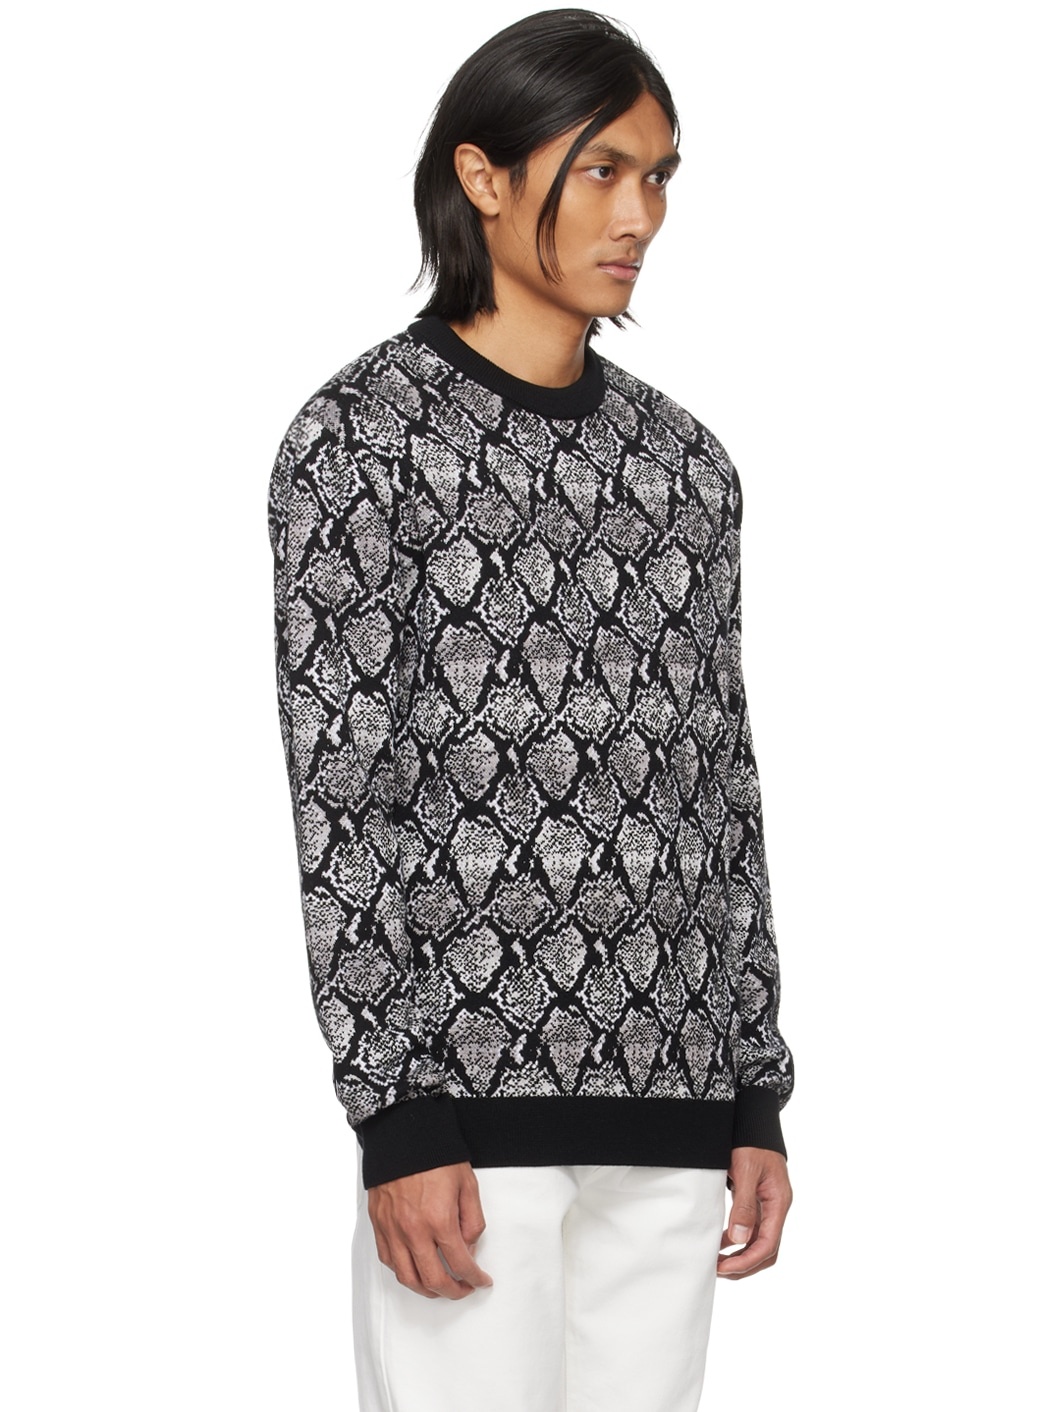 Black & Gray Snakeskin Sweater - 2